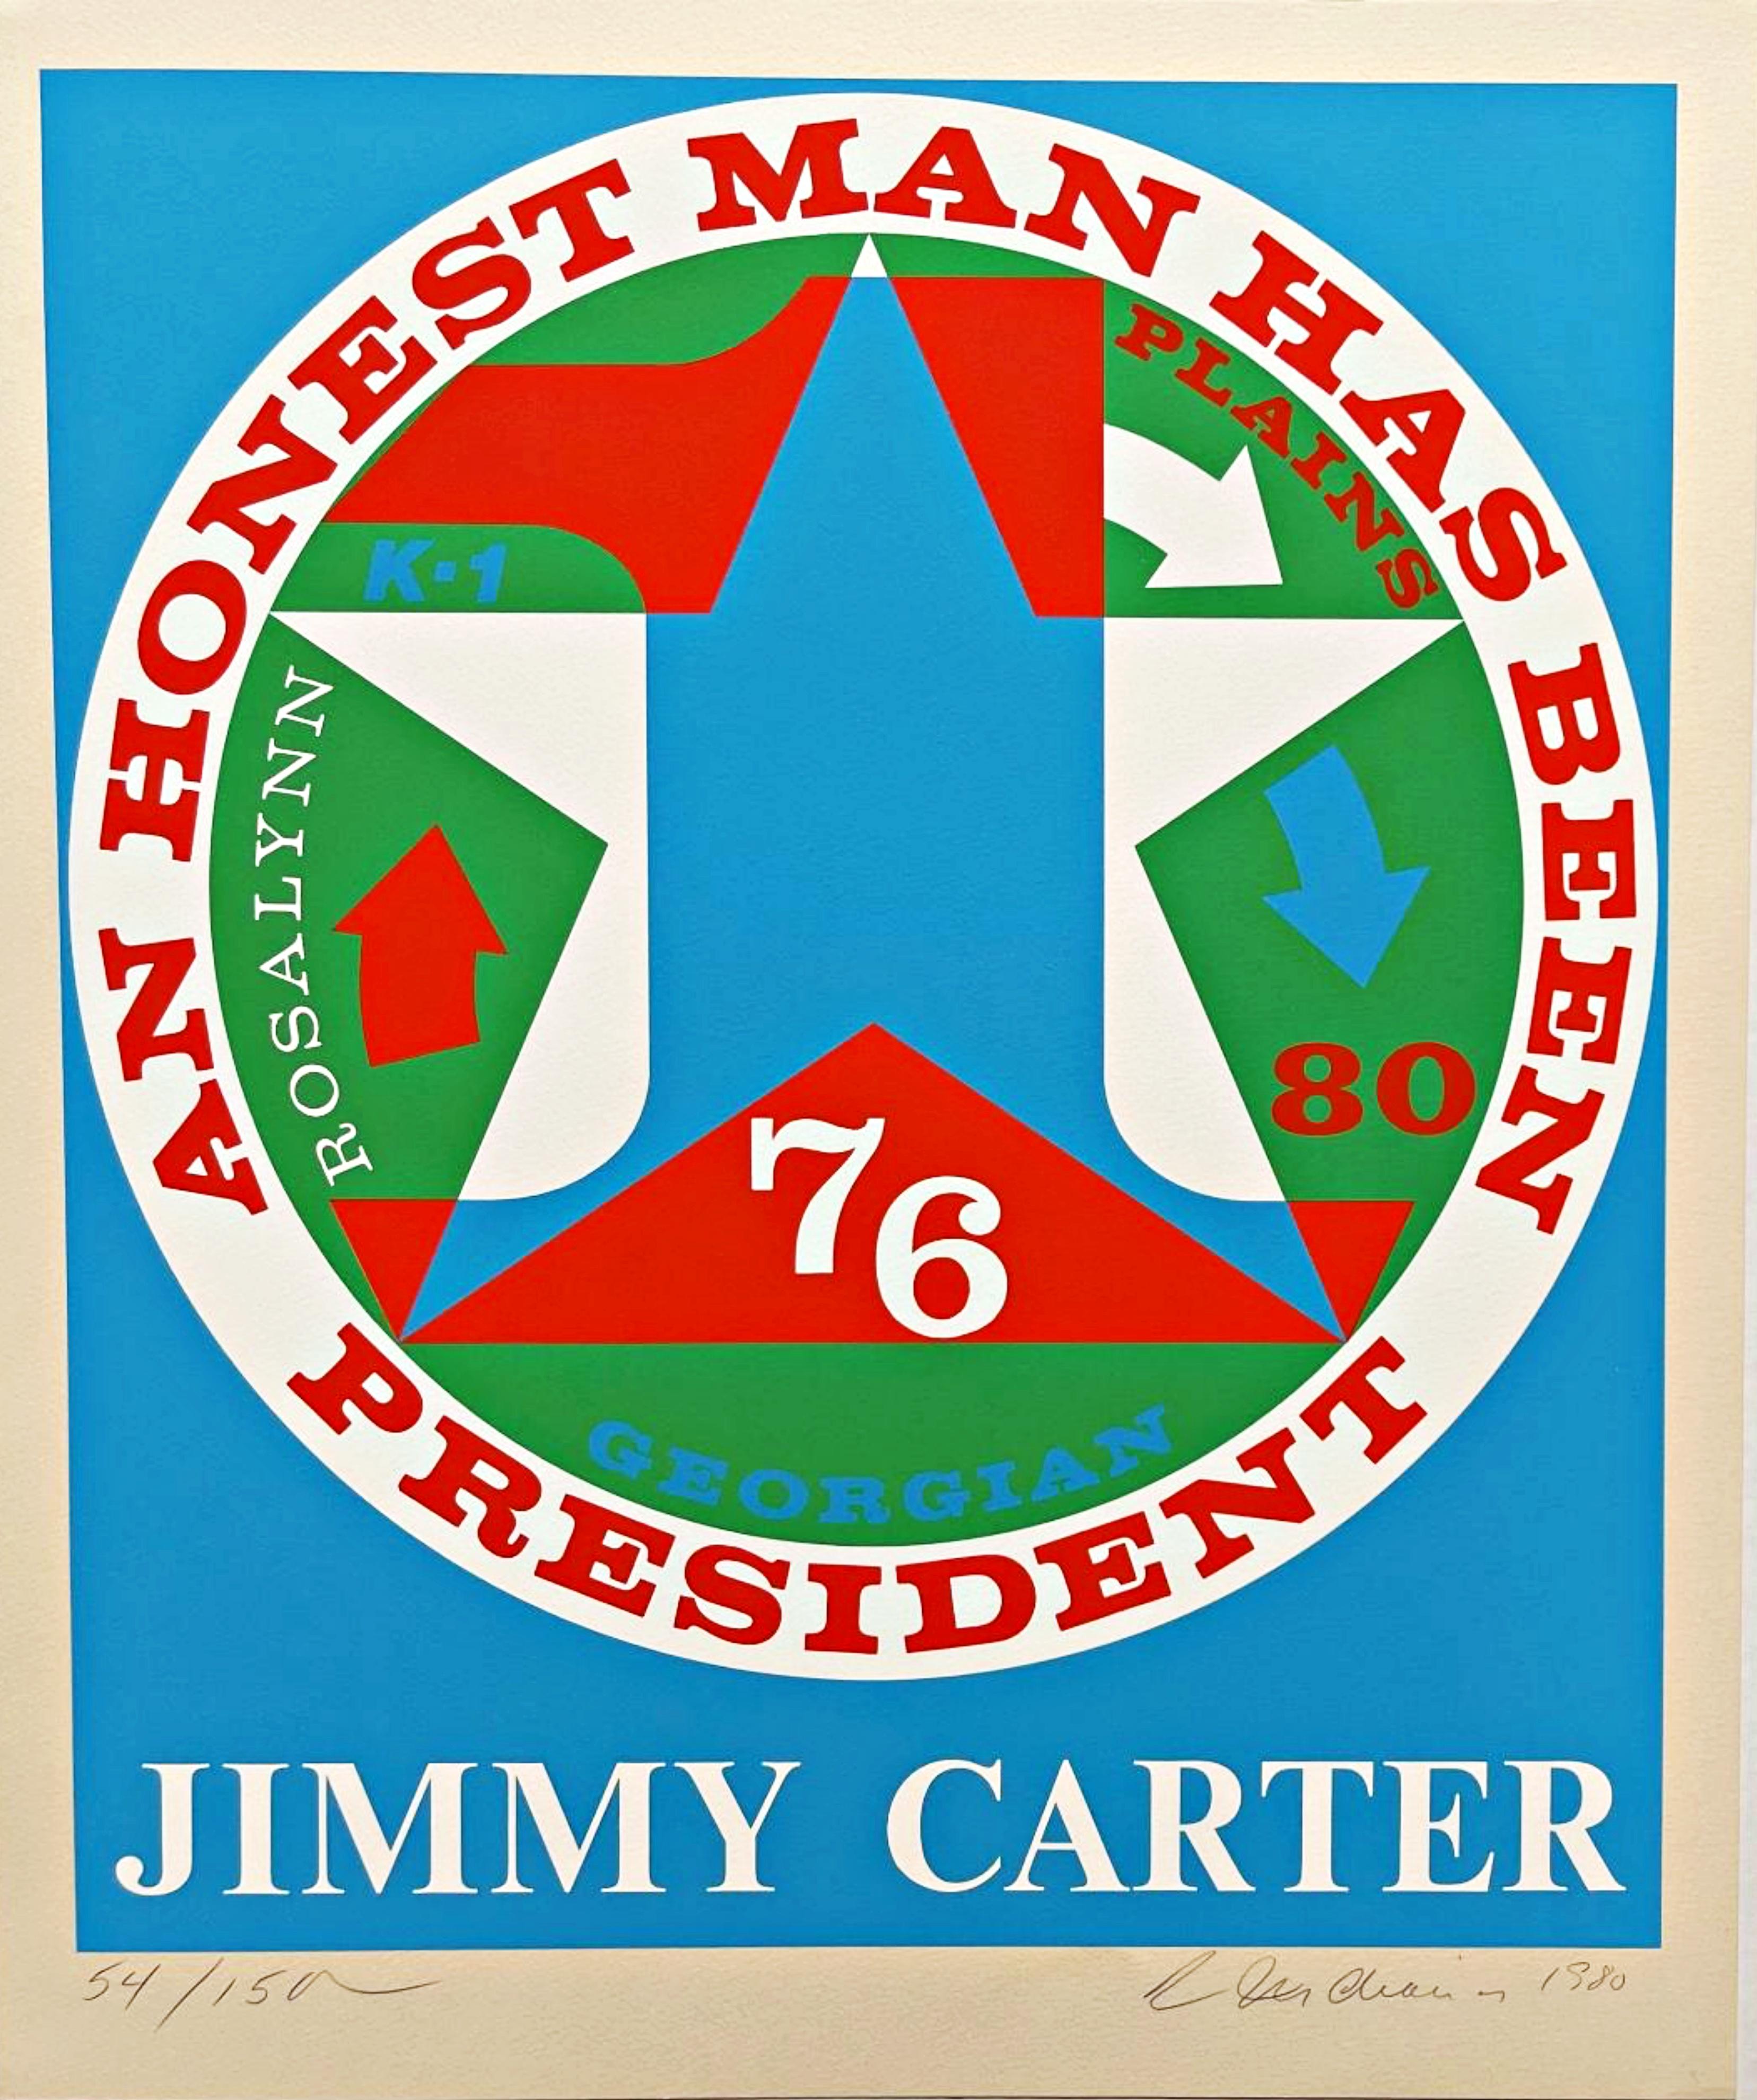 Robert Indiana Abstract Print - An Honest Man Has Been President: Homage to Jimmy Carter (Sheehan, 112)